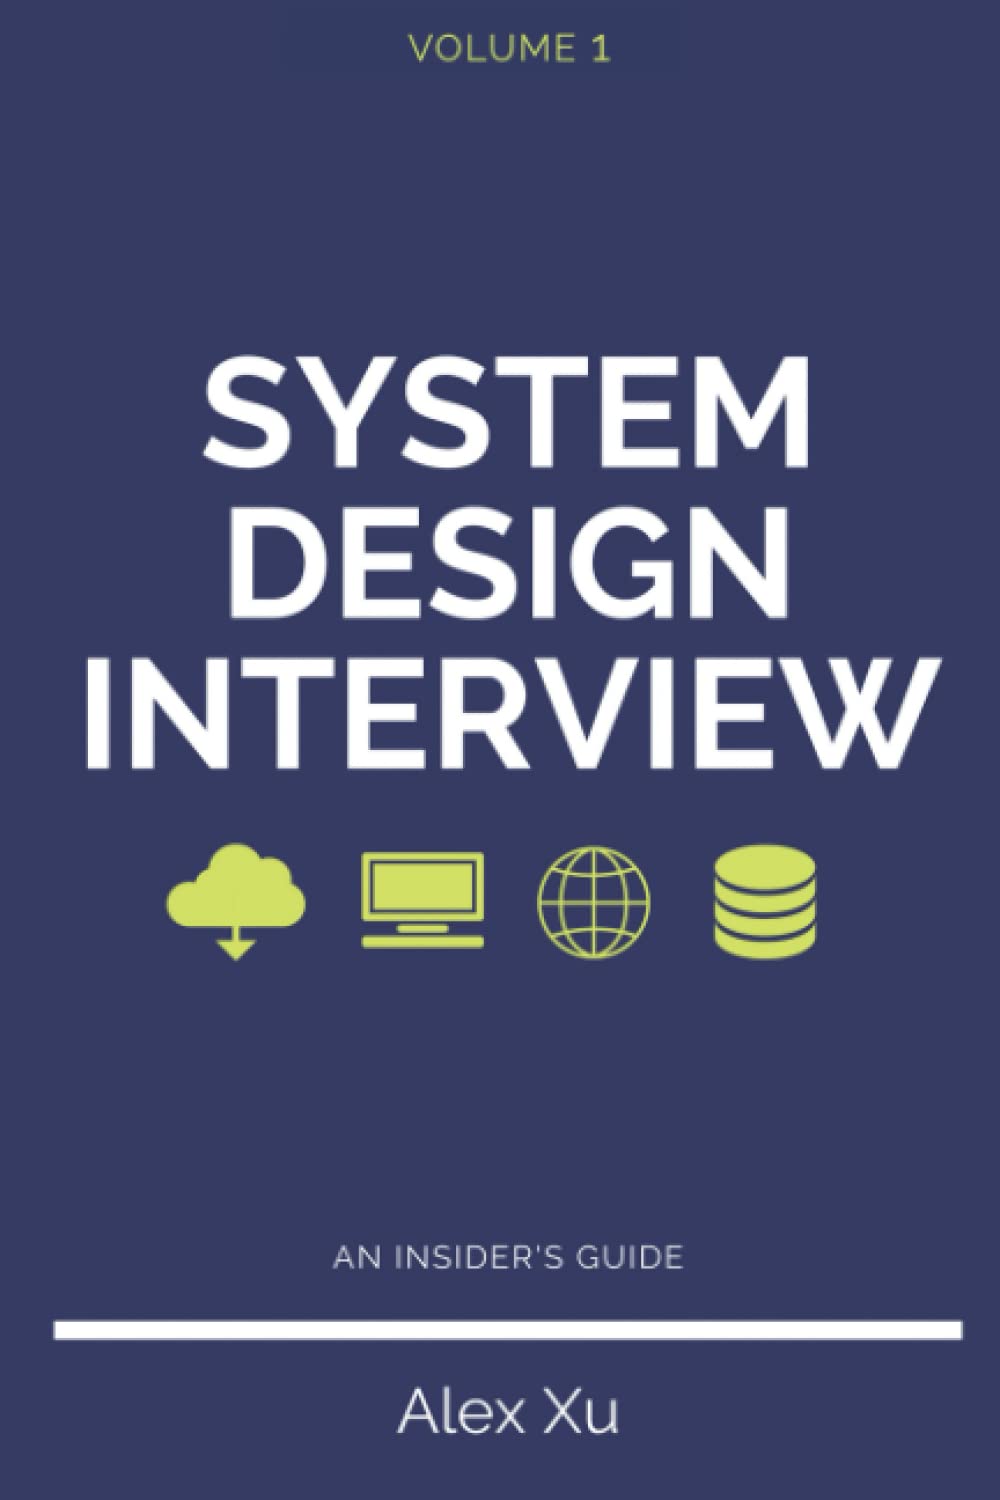 System Design Interview - Chapter 8 - Design a URL Shortener